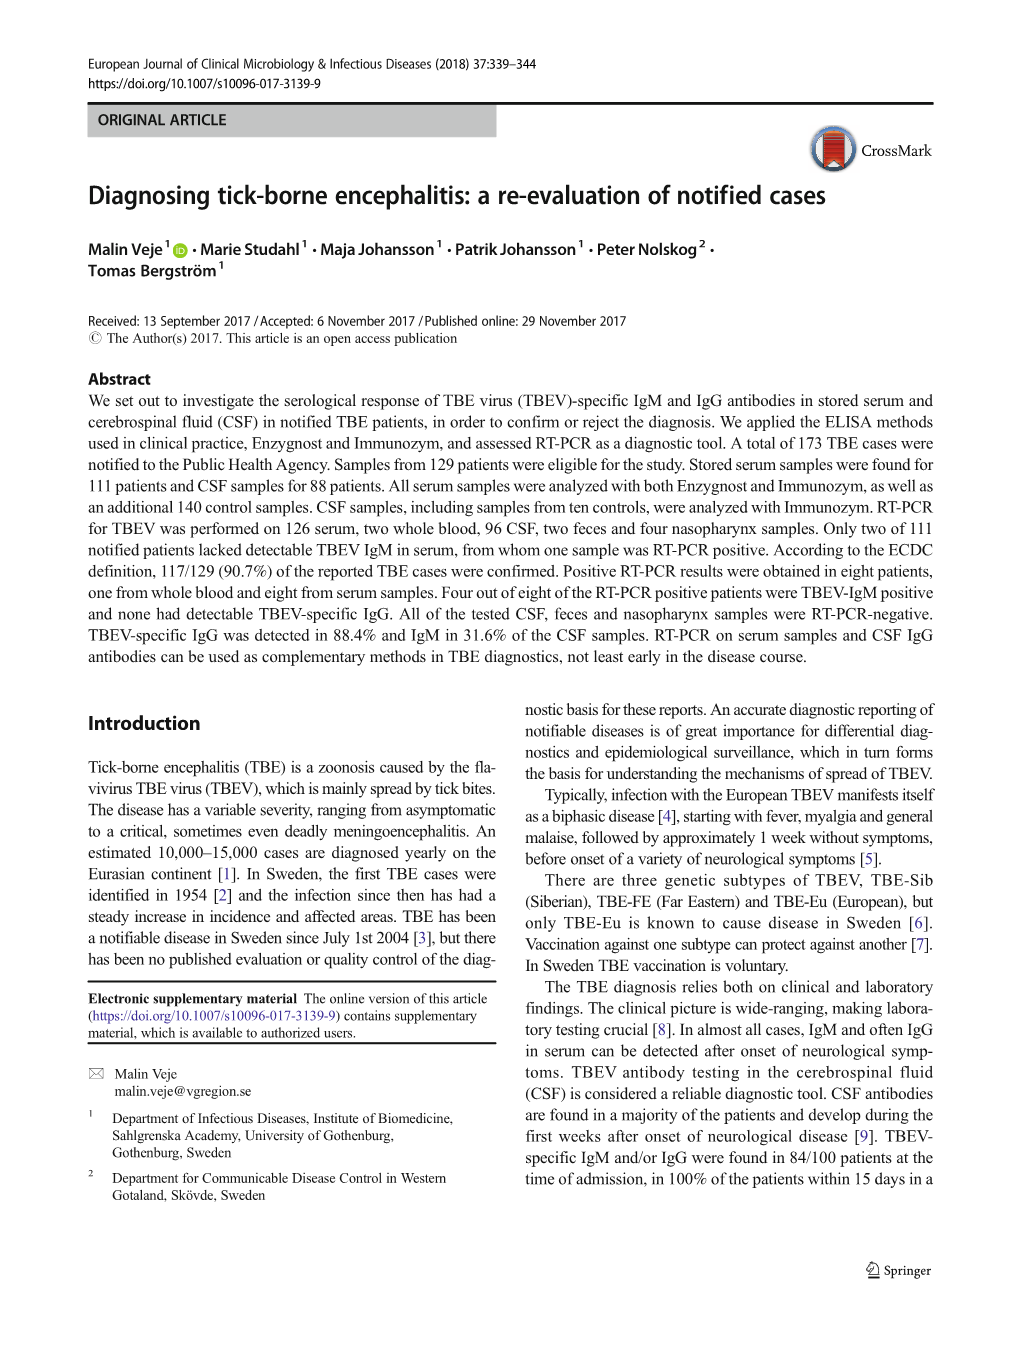 Diagnosing Tick-Borne Encephalitis: a Re-Evaluation of Notified Cases